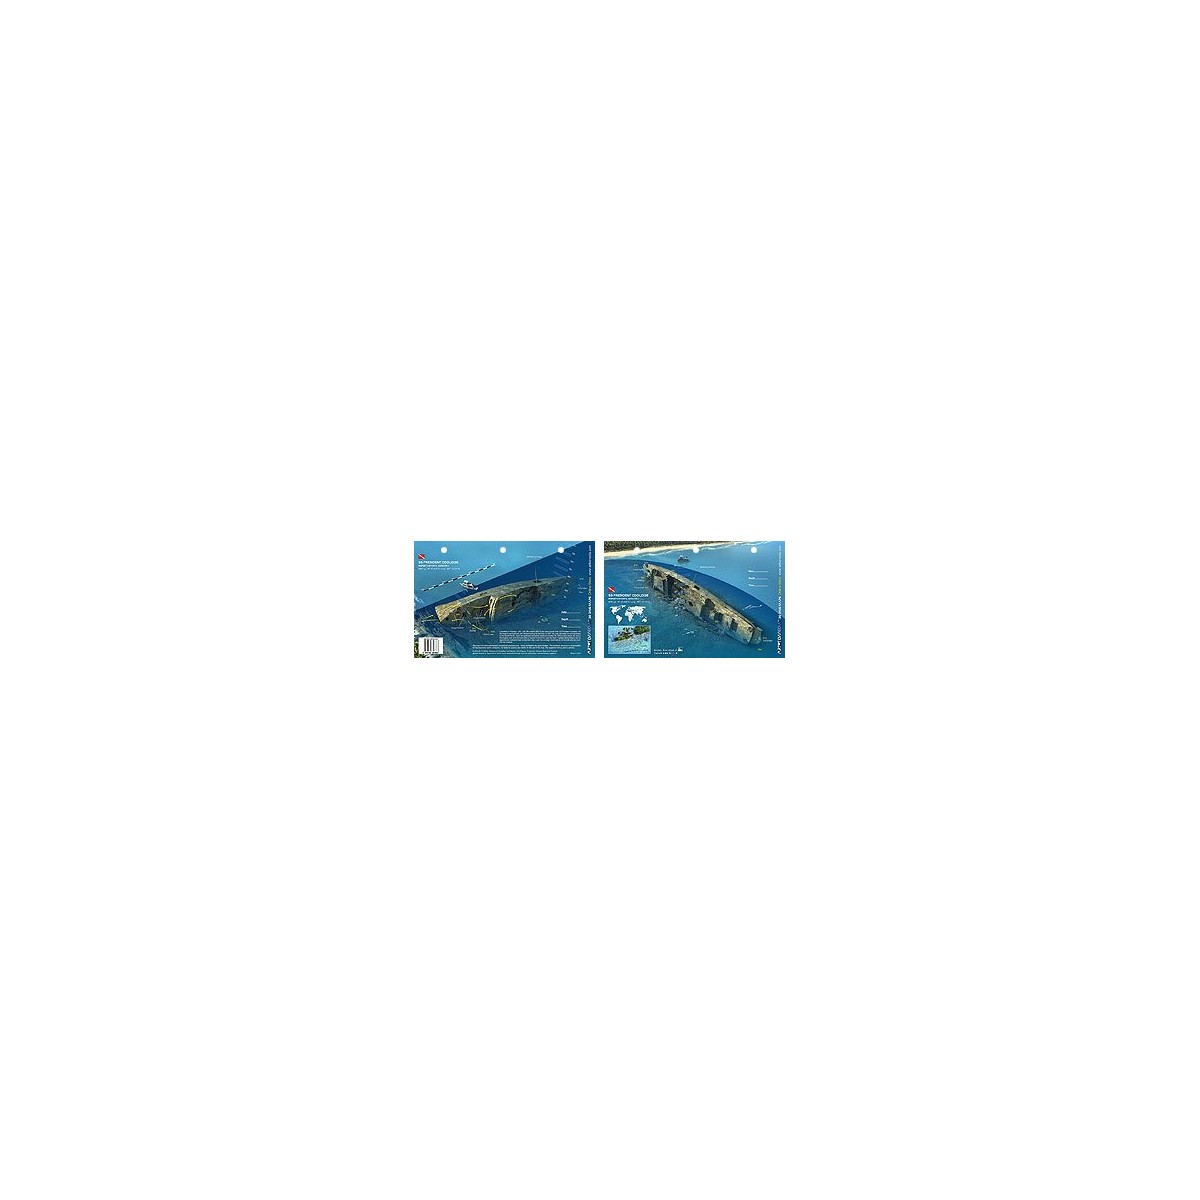 SS President Coolidge in Vanuatu (8.5 x 5.5 Inches) (21.6 x 15cm) - New Art to Media Underwater Waterproof 3D Dive Site Map